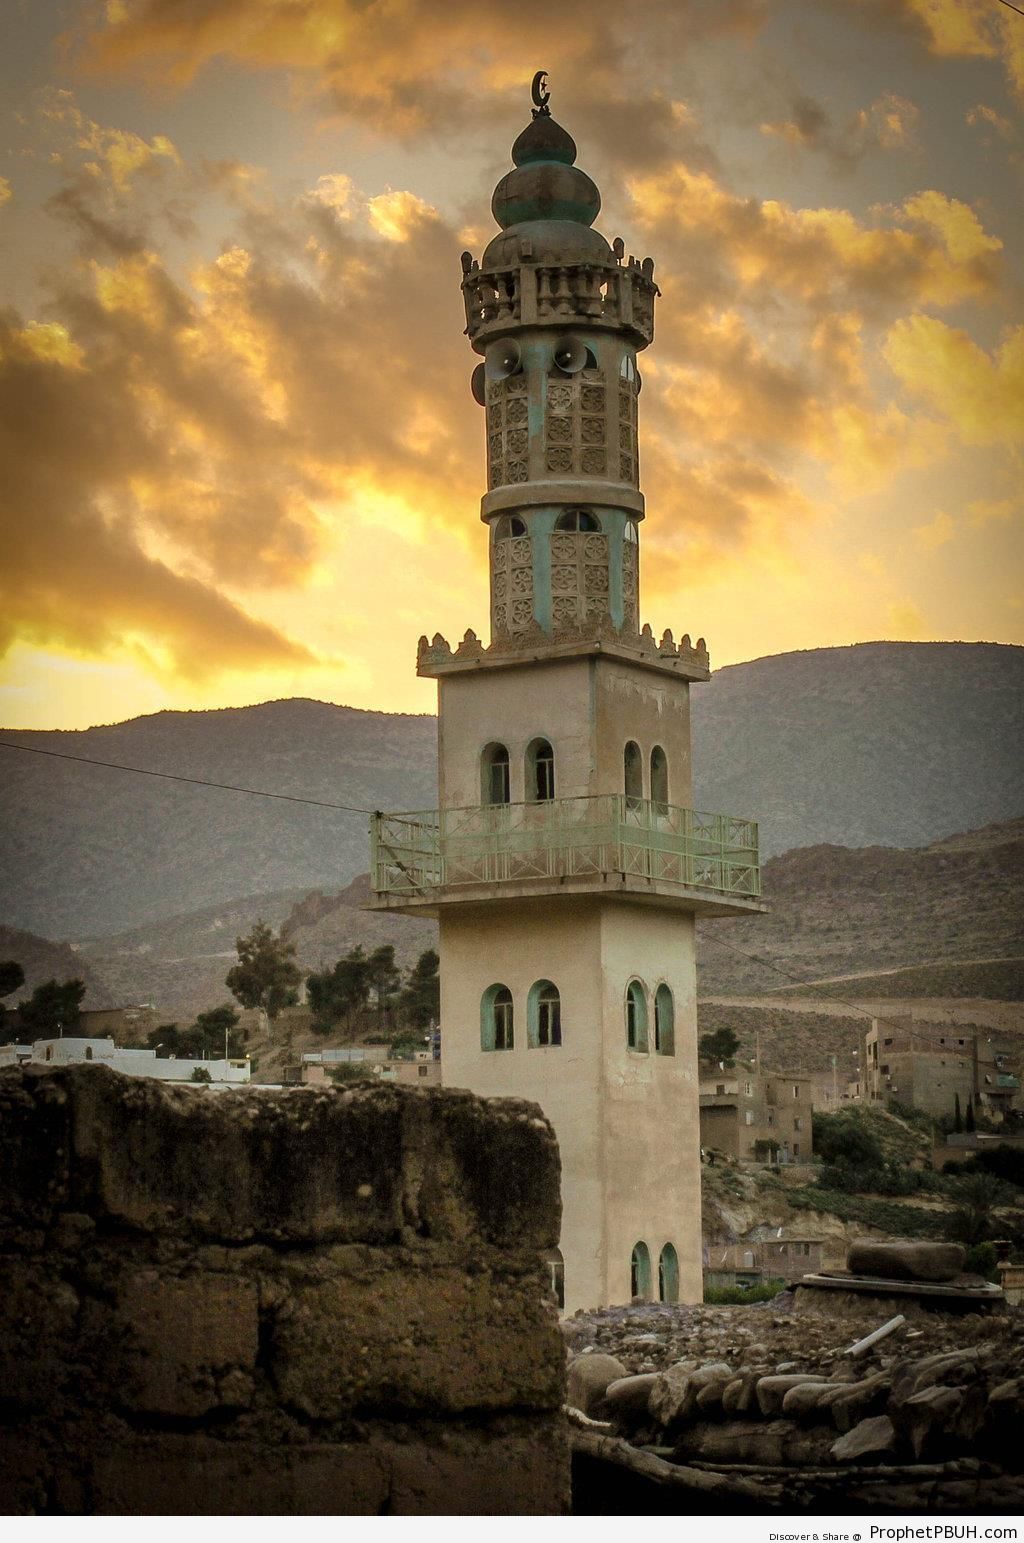 Mosque at Sundown - Islamic Architecture -Picture